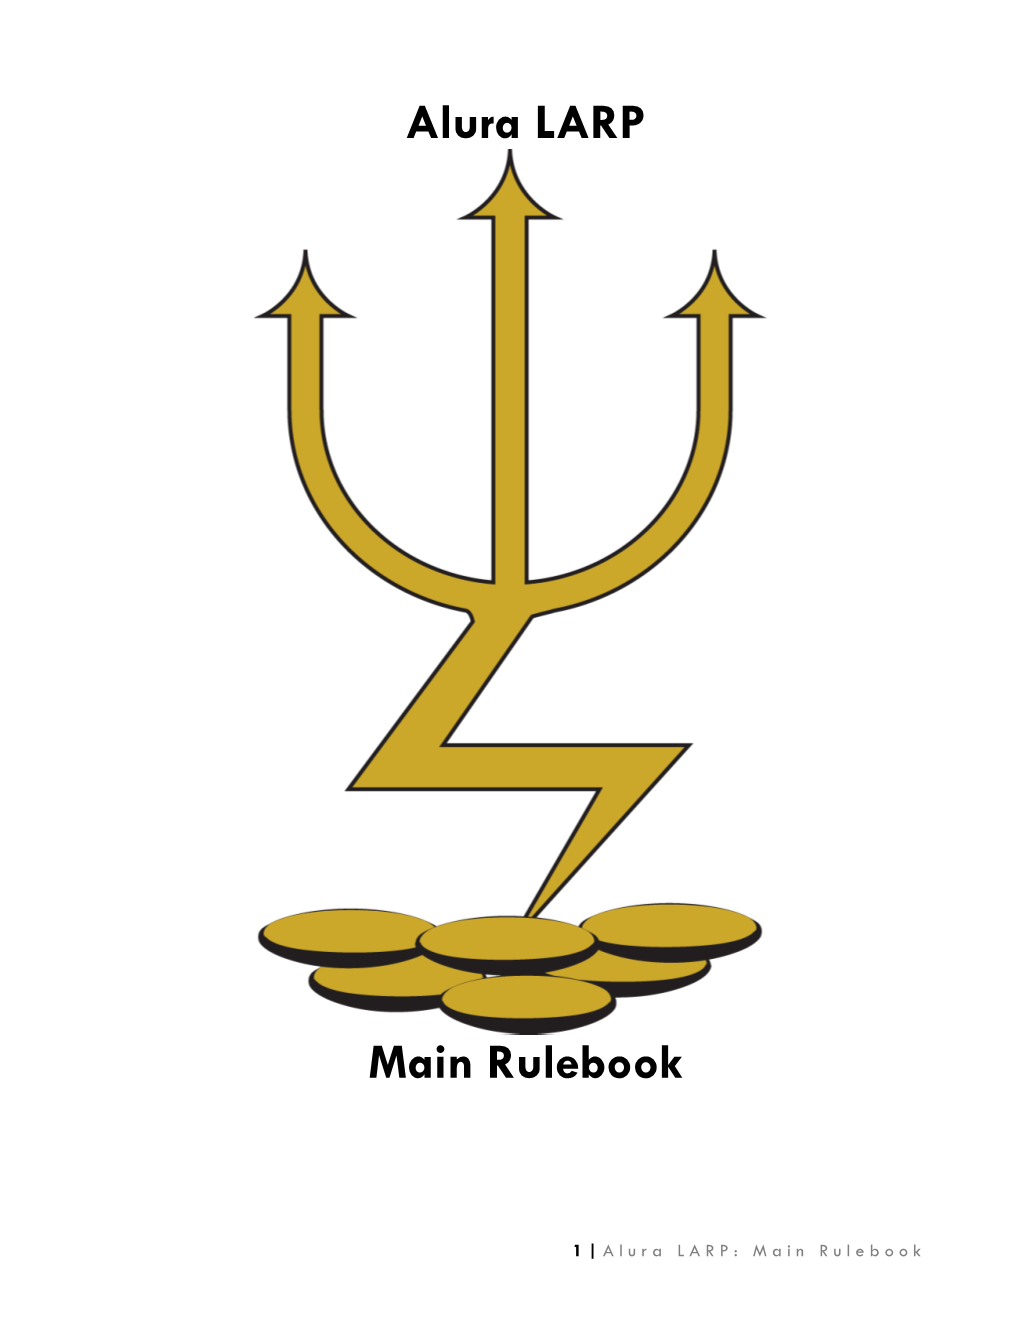 Alura LARP Main Rulebook